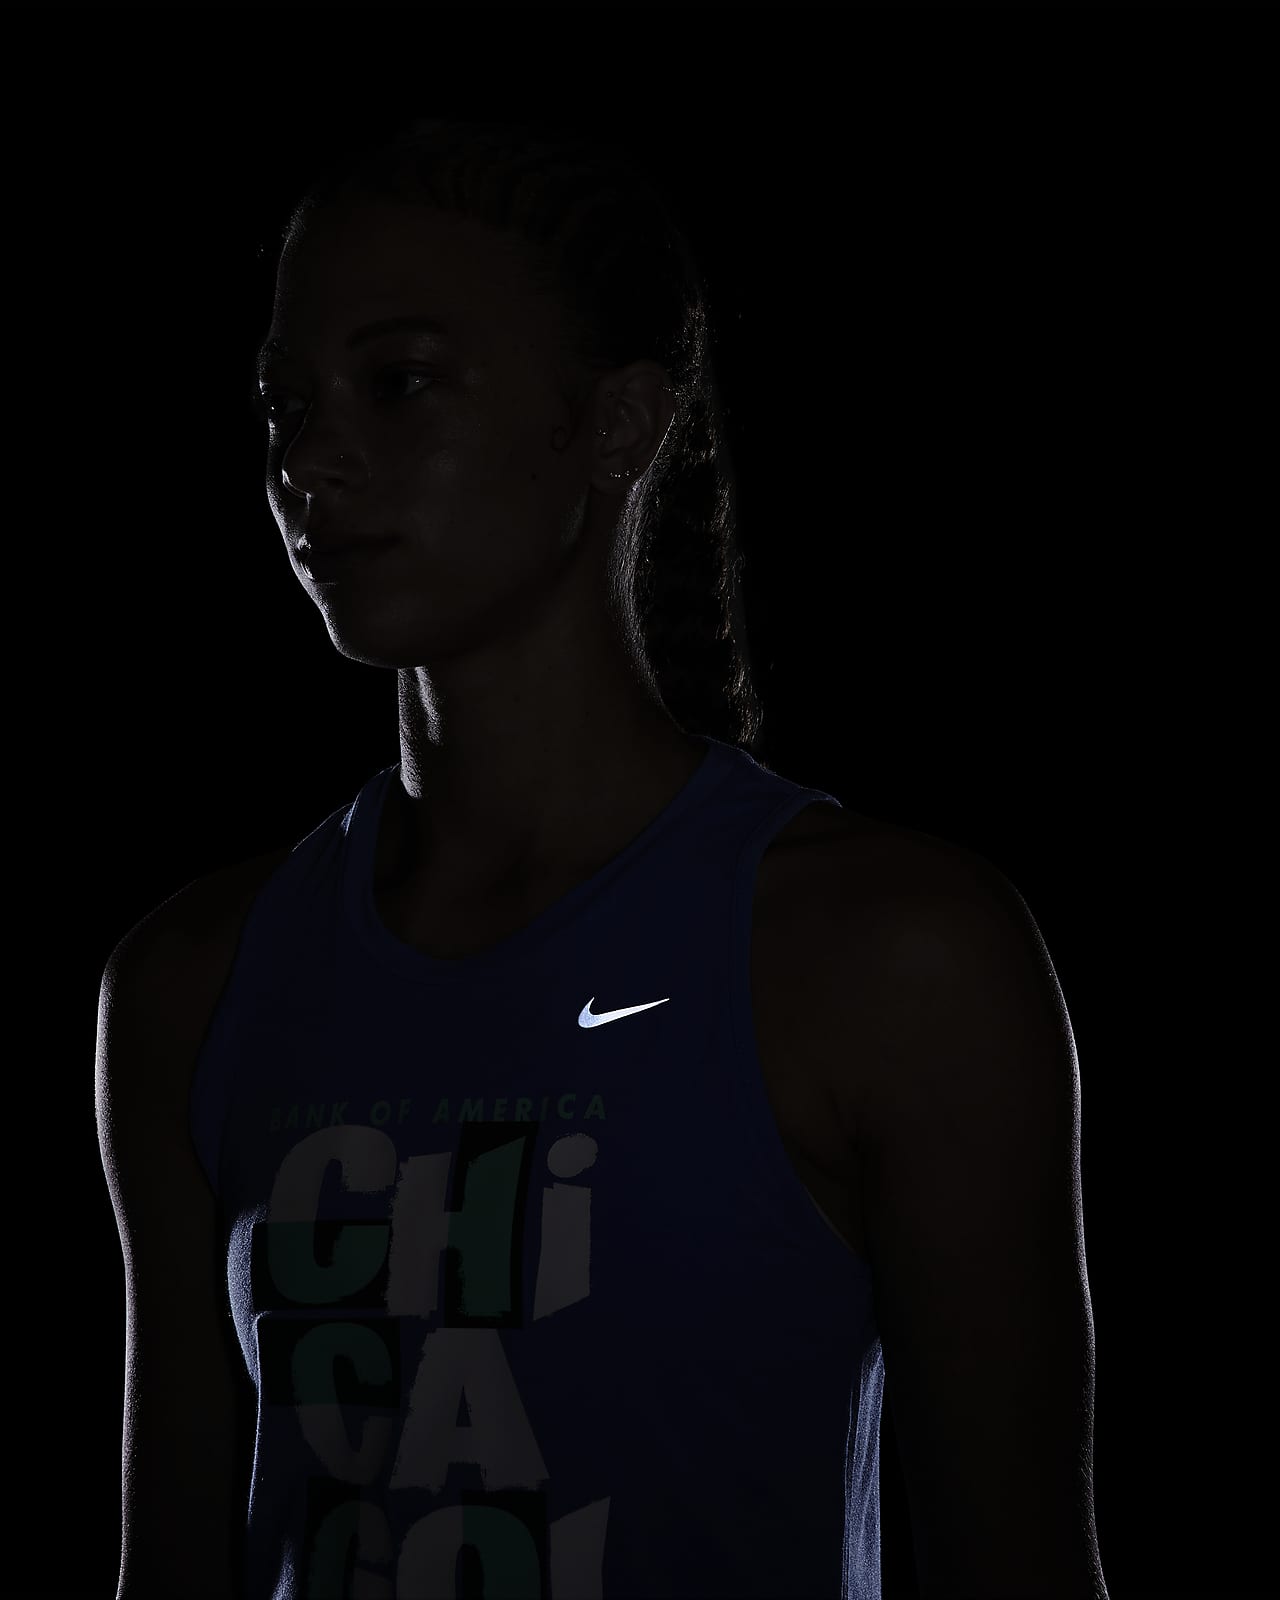 Nike Womens One Slim Tank Top - Black